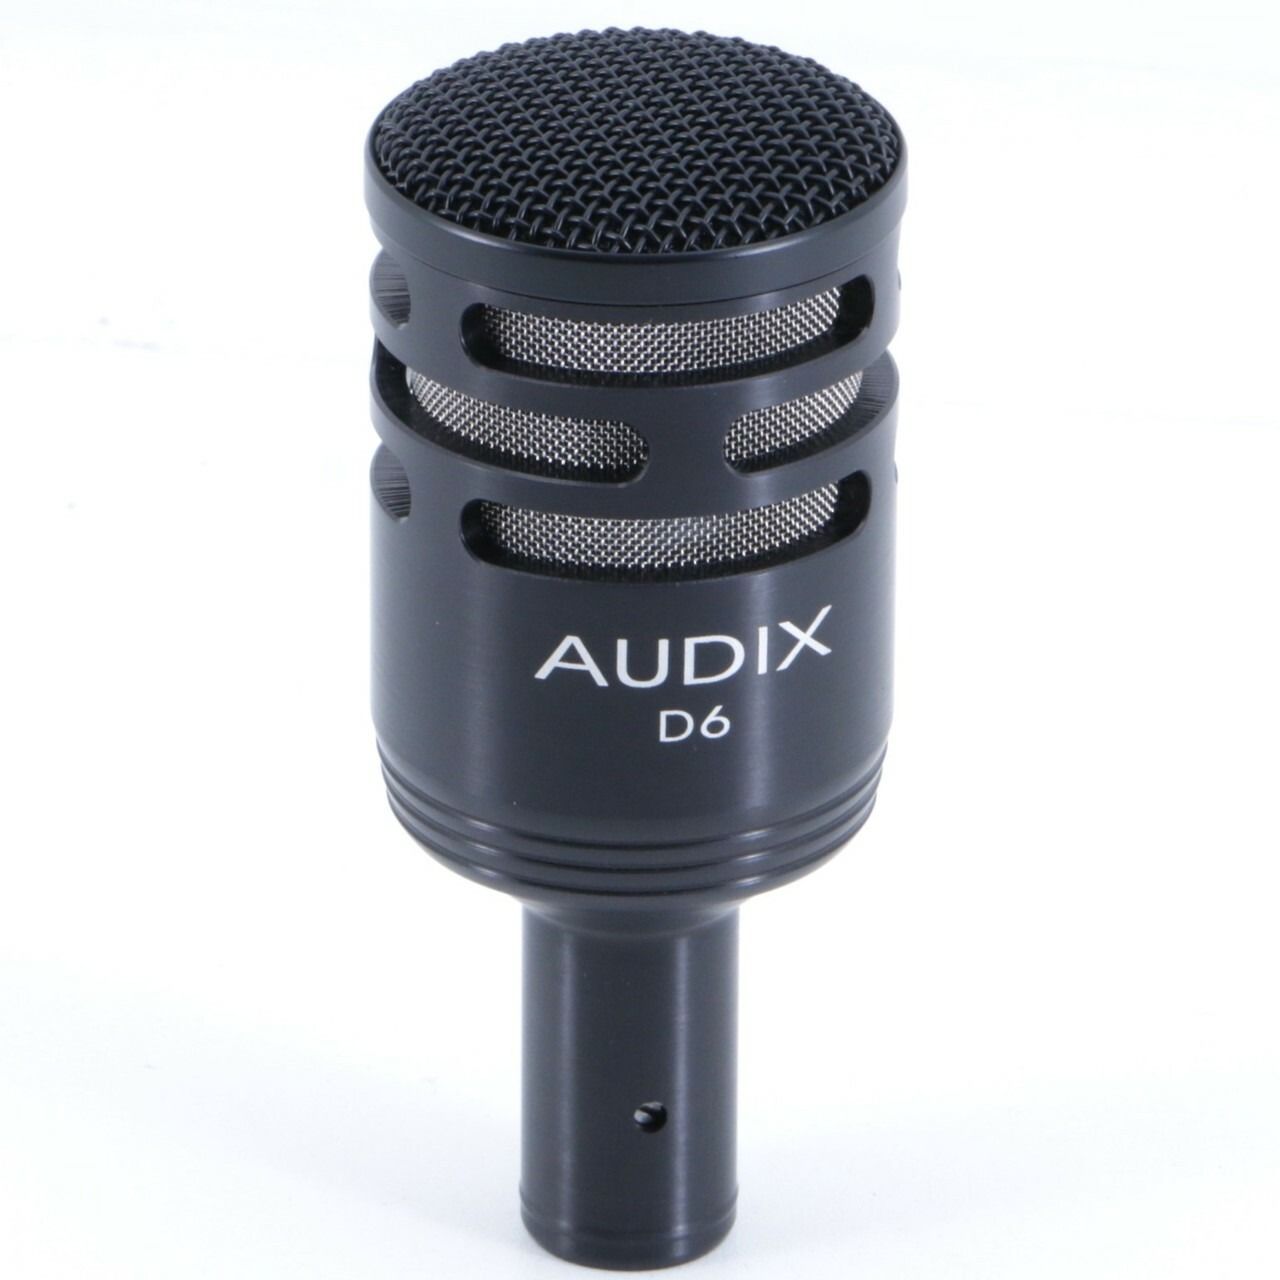  Micro Audix - D6 